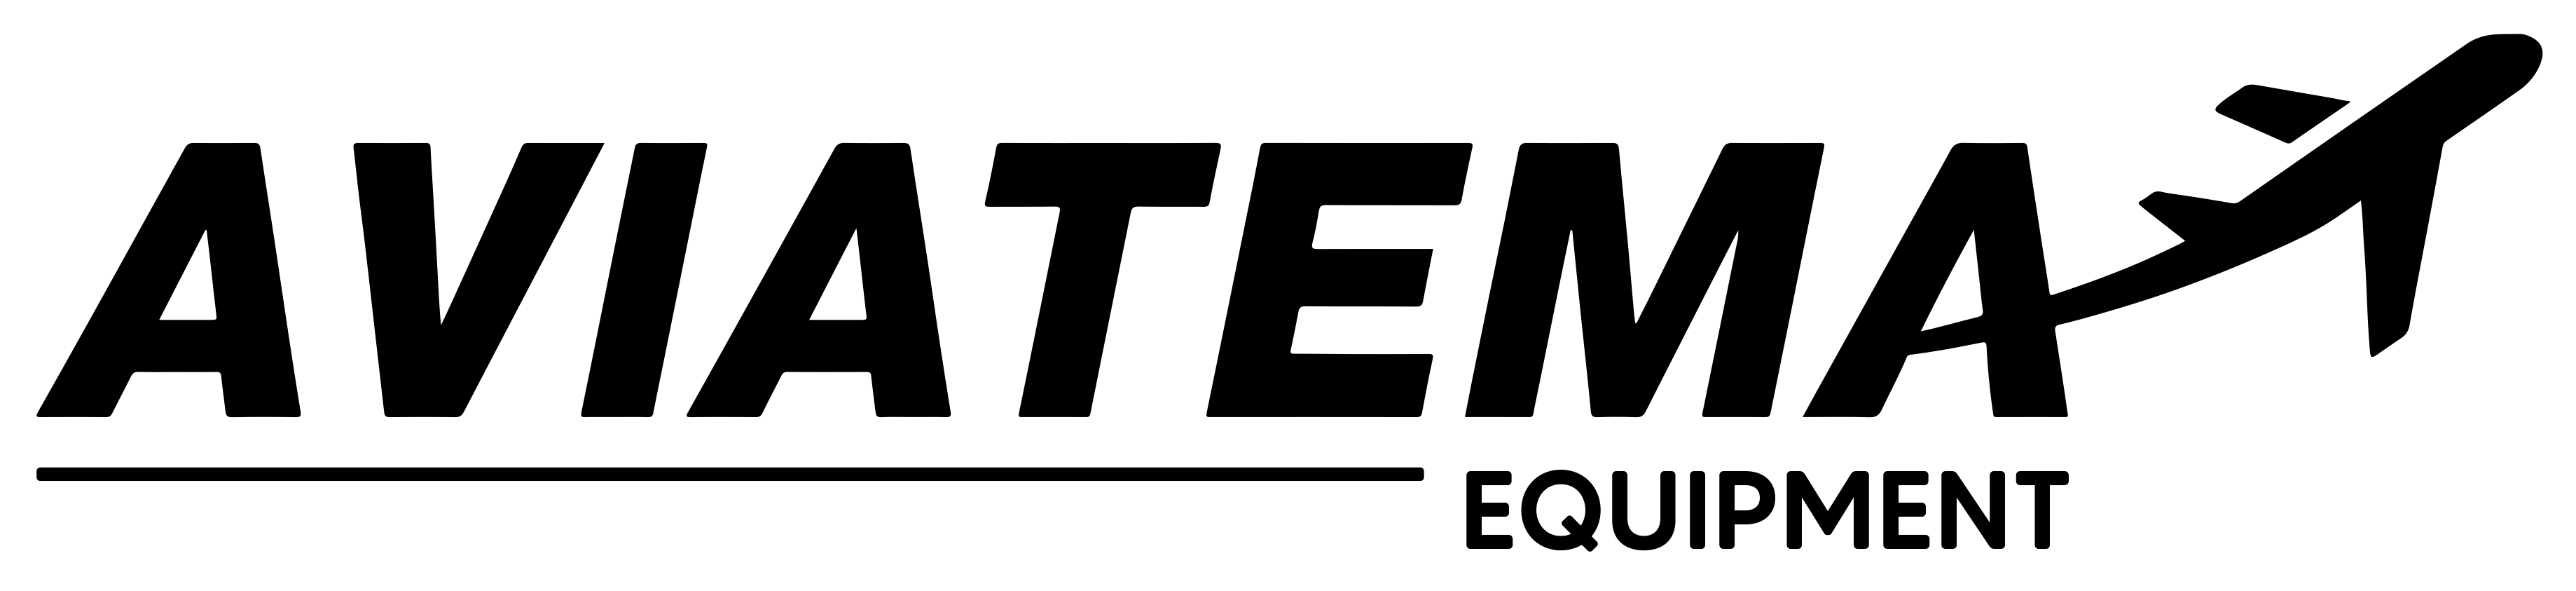 Aviatema equipment logo black